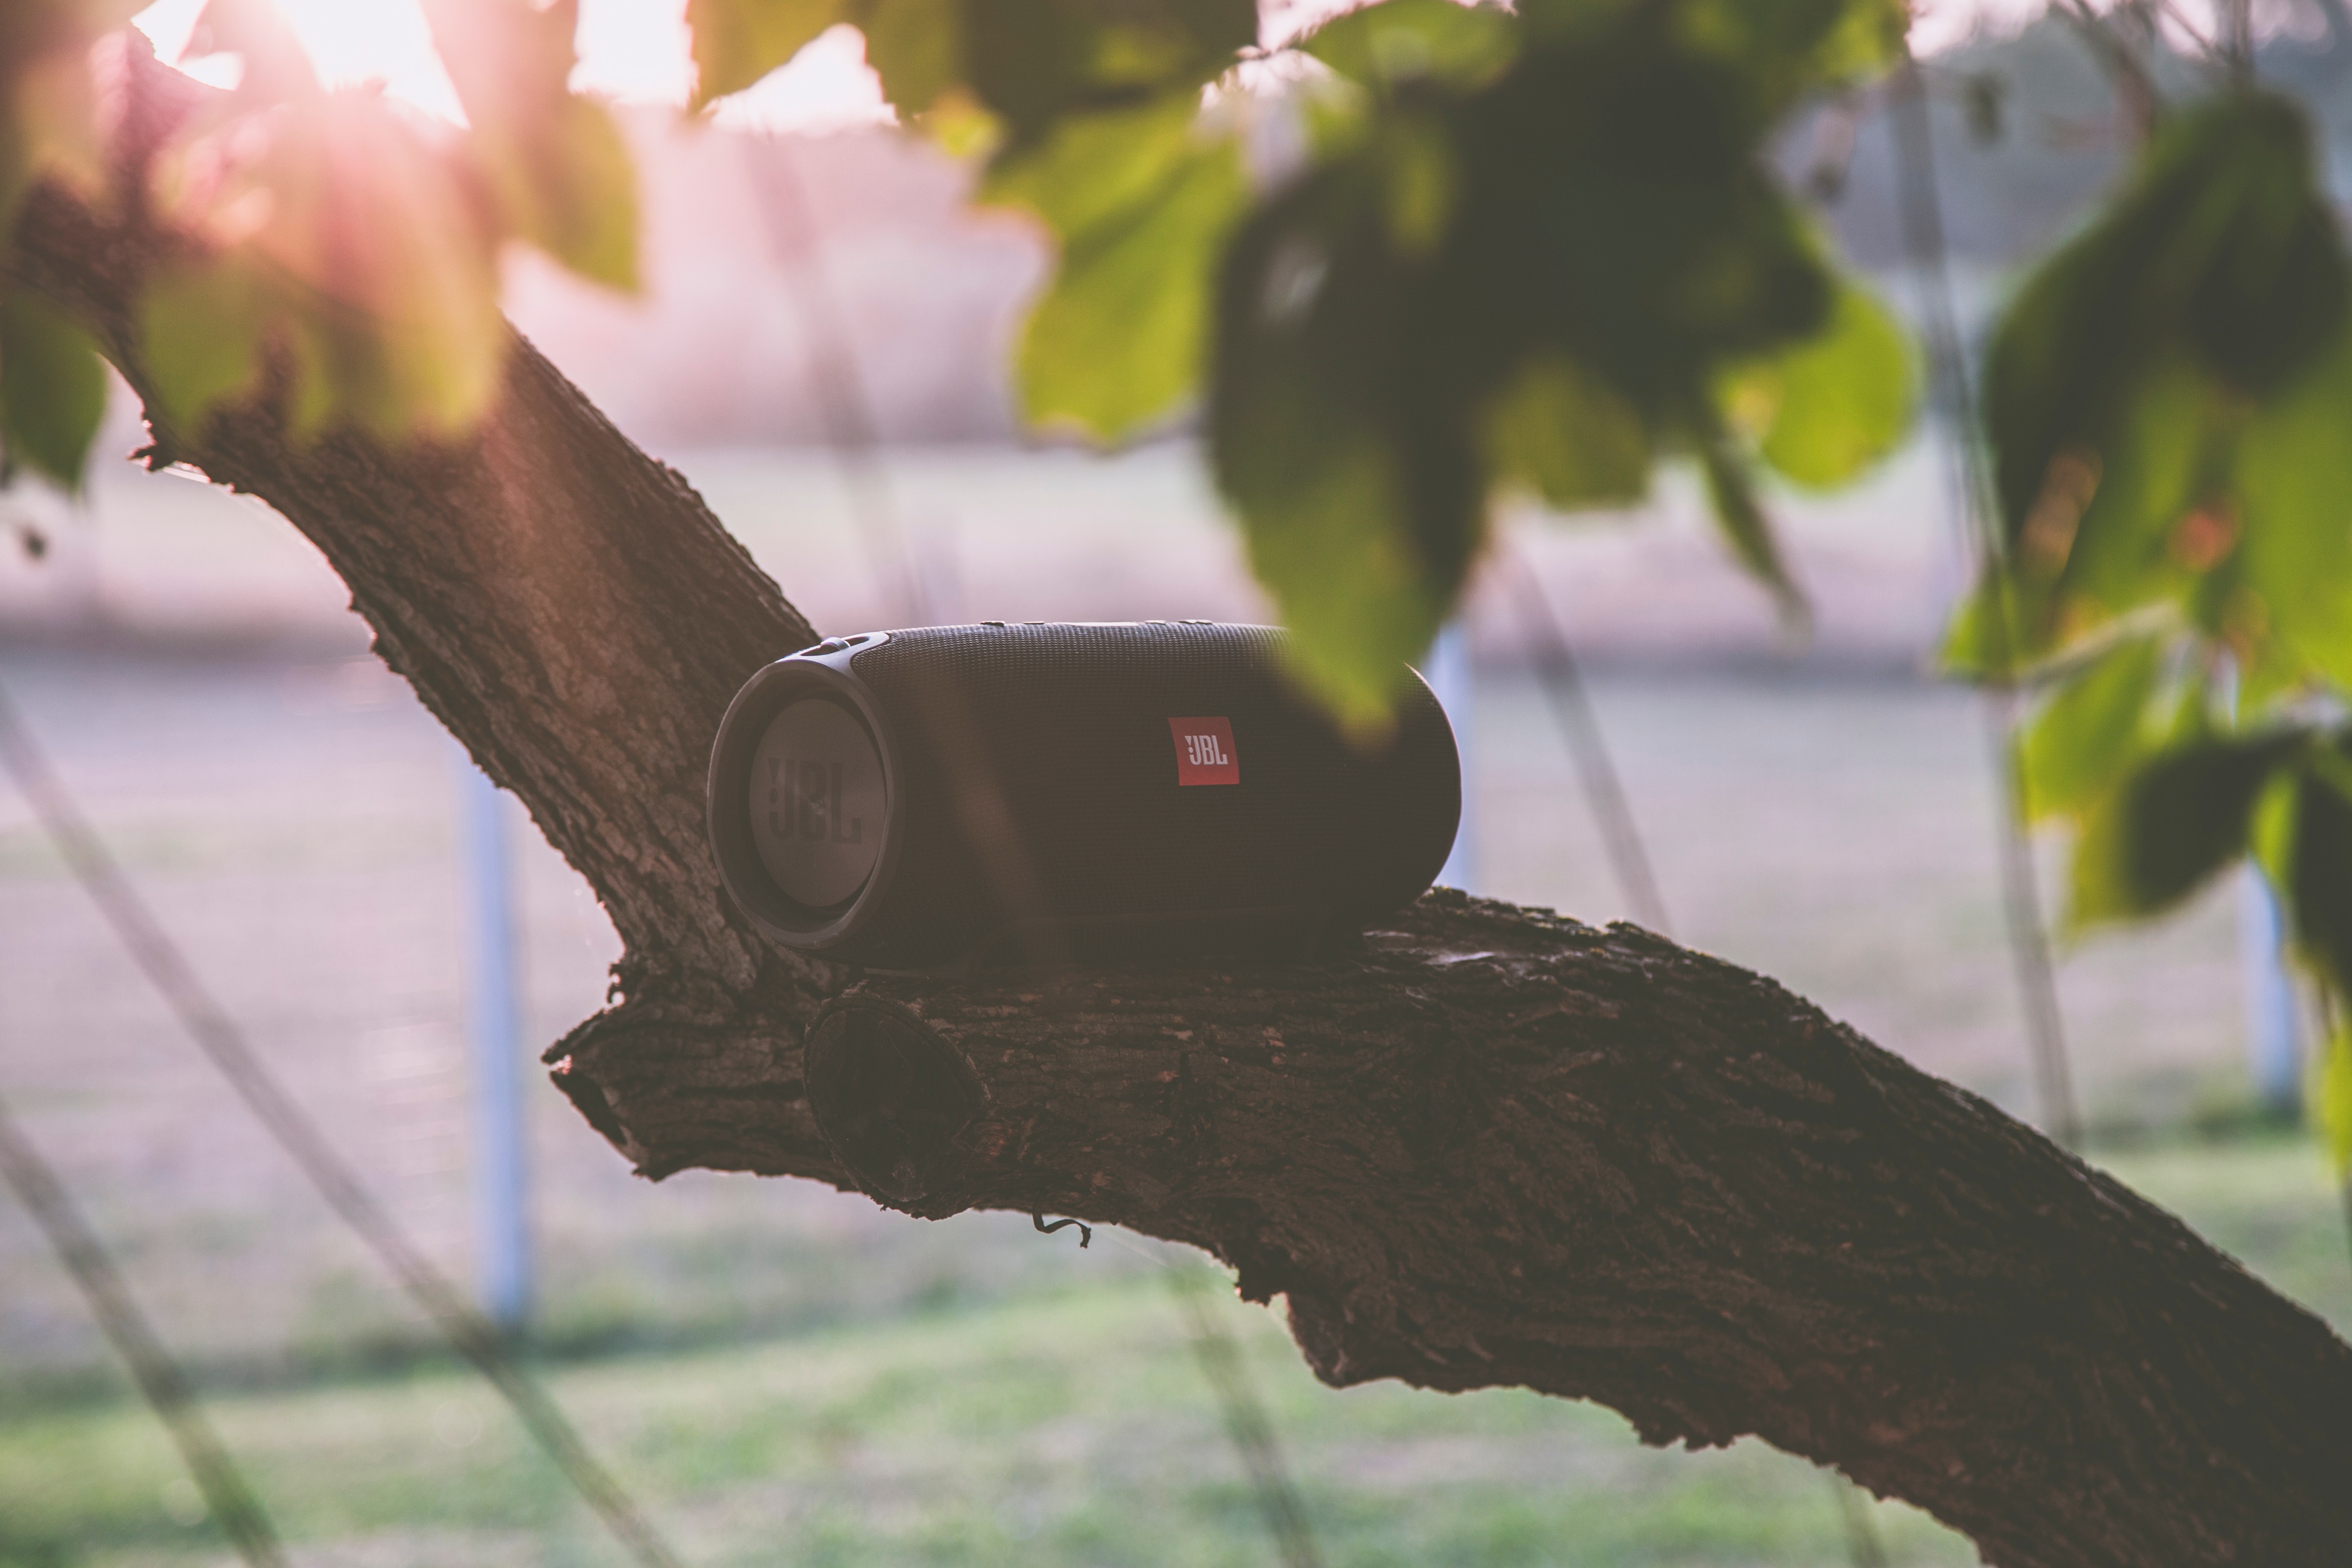 Black jbl bluetooth speaker on tree branch photo